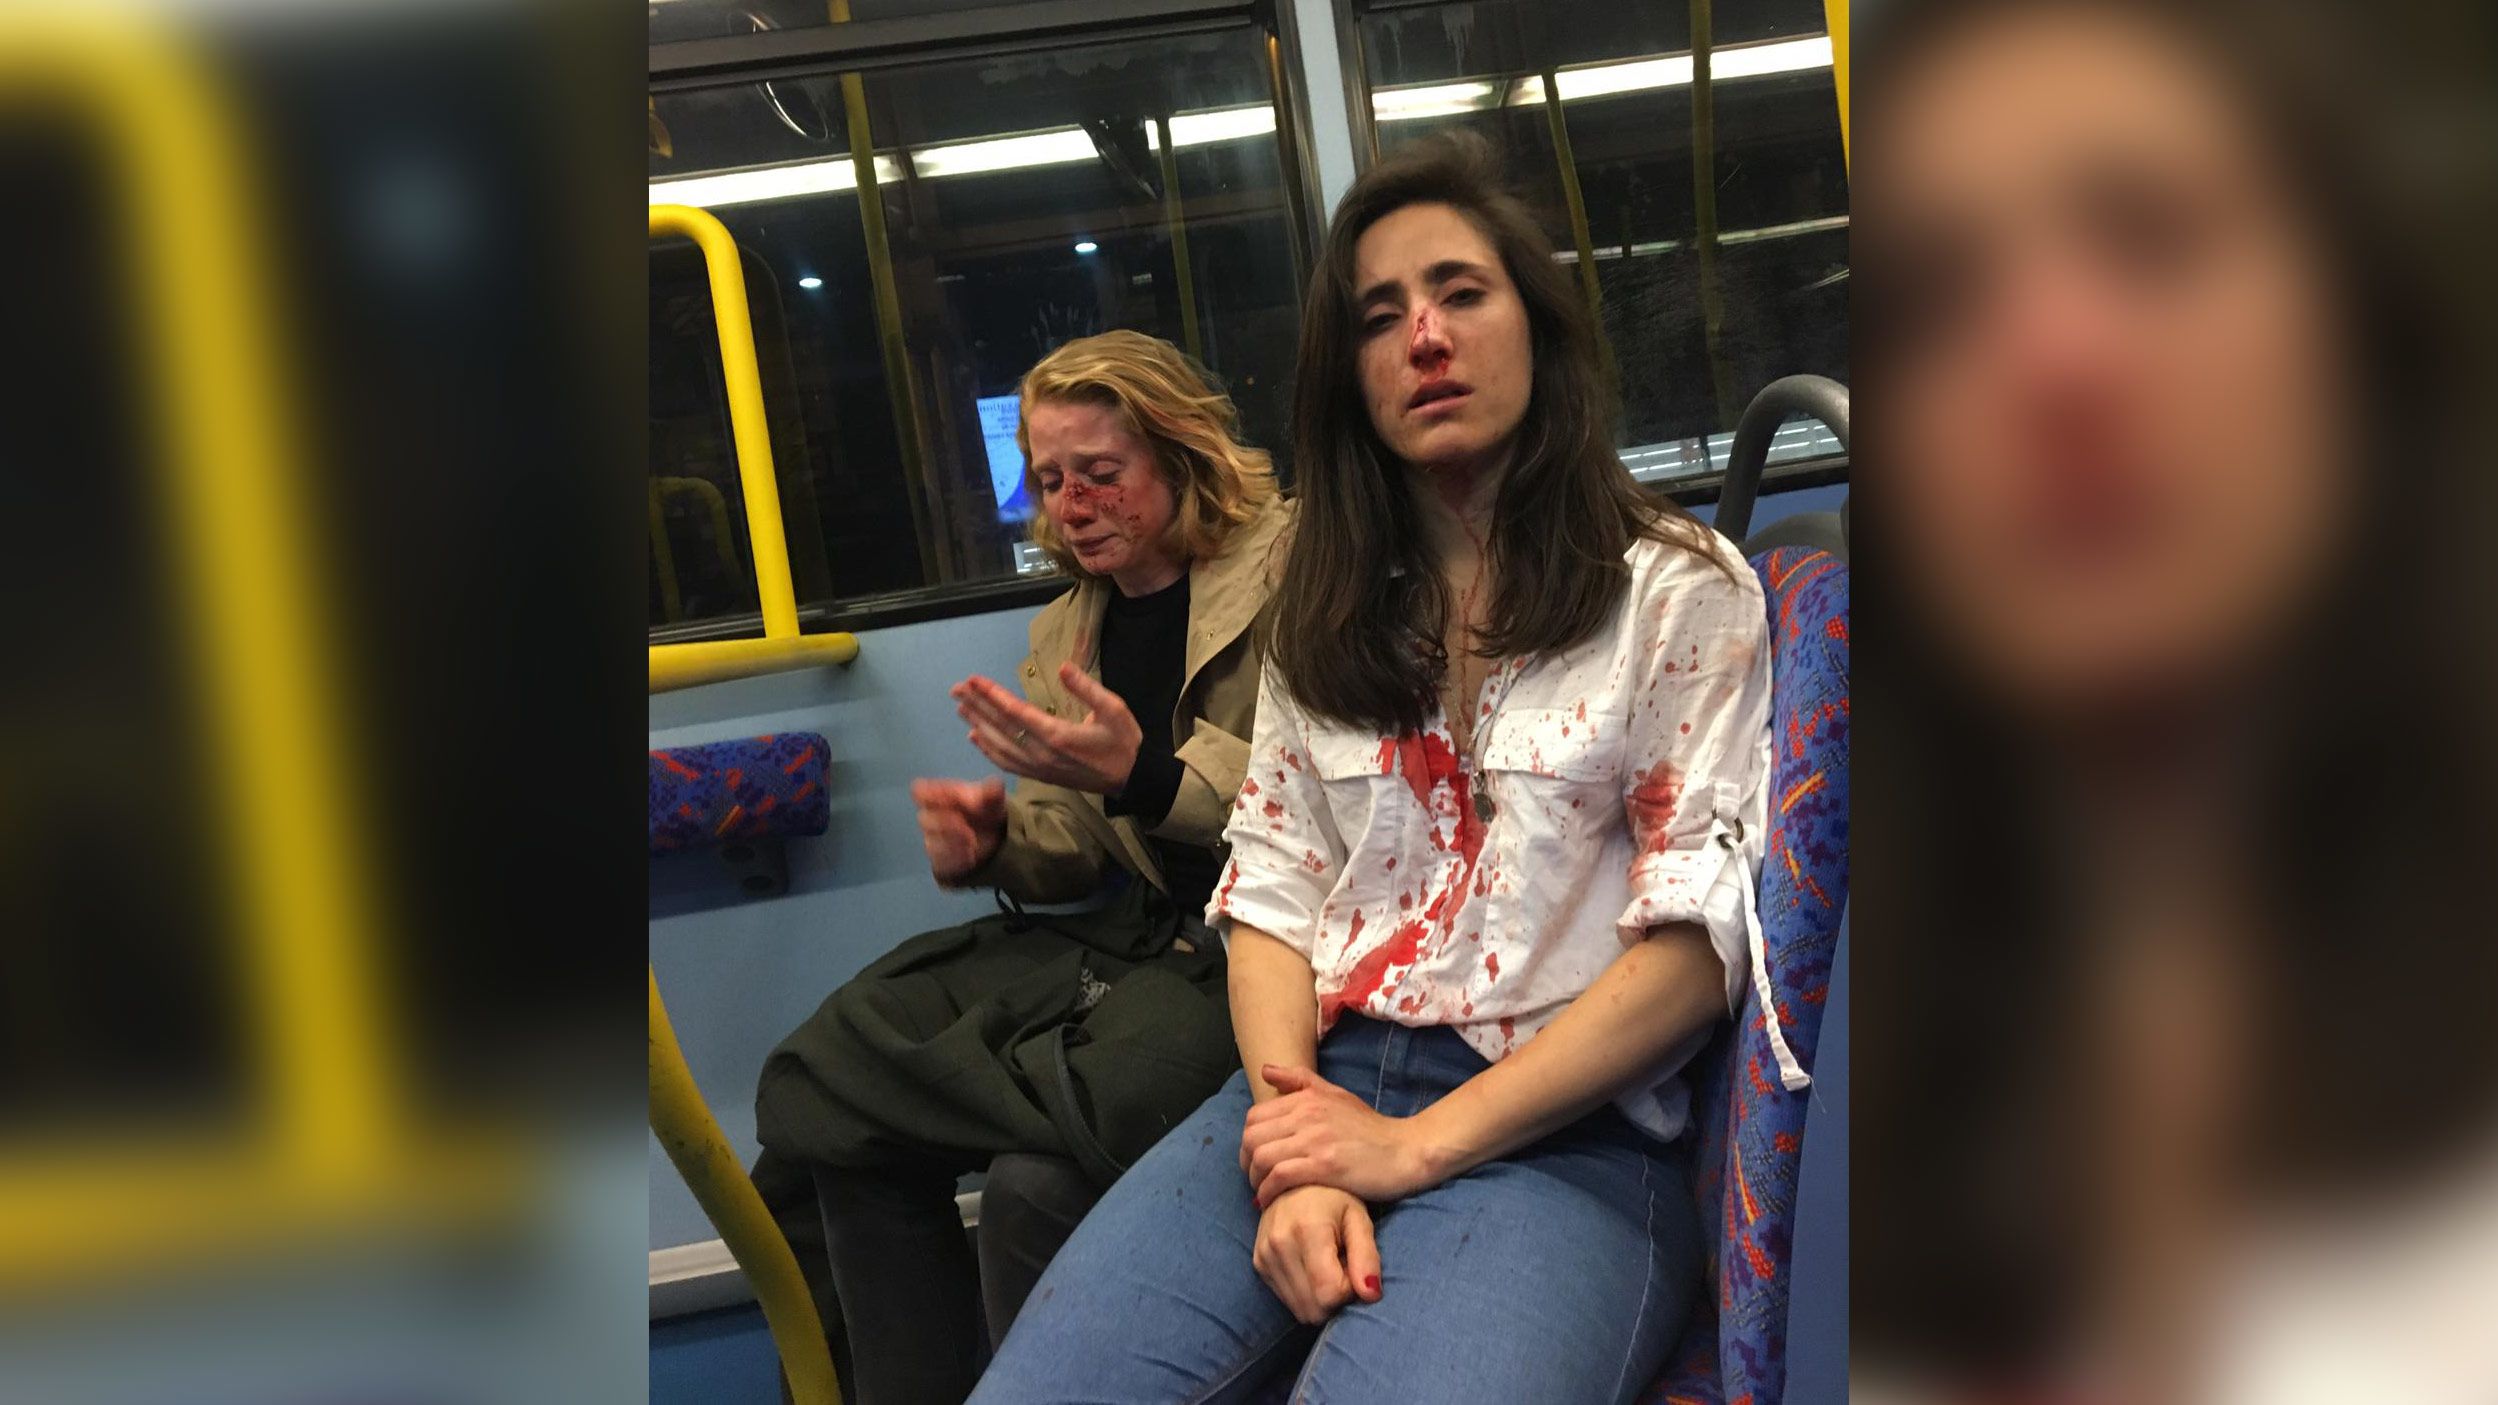 Www London Xxx Rep Videos - Lesbian couple viciously beaten in homophobic attack on London bus | CNN